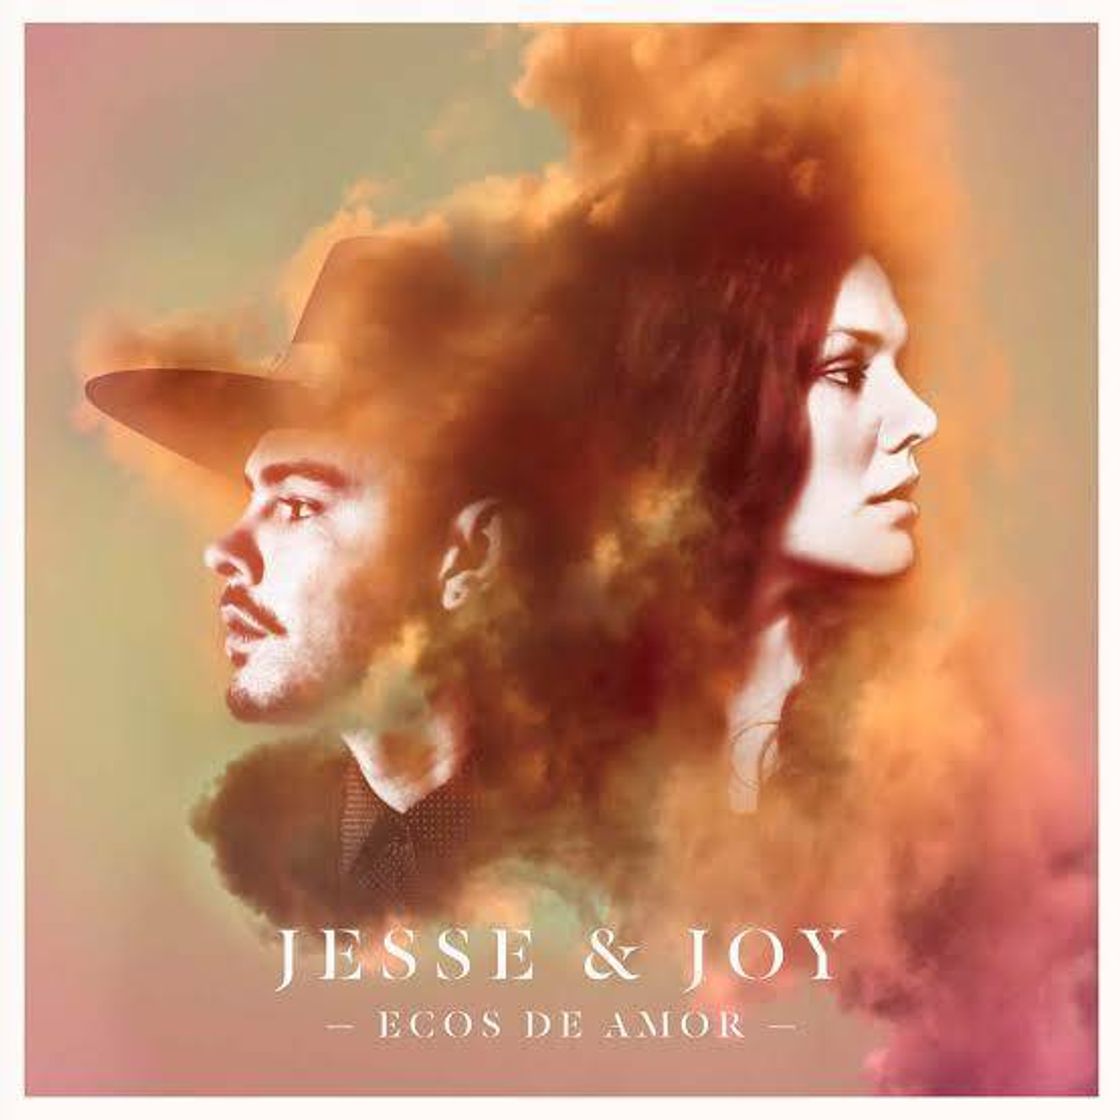 Jesse & Joy - "Ecos de Amor" -Video Oficial - YouTube